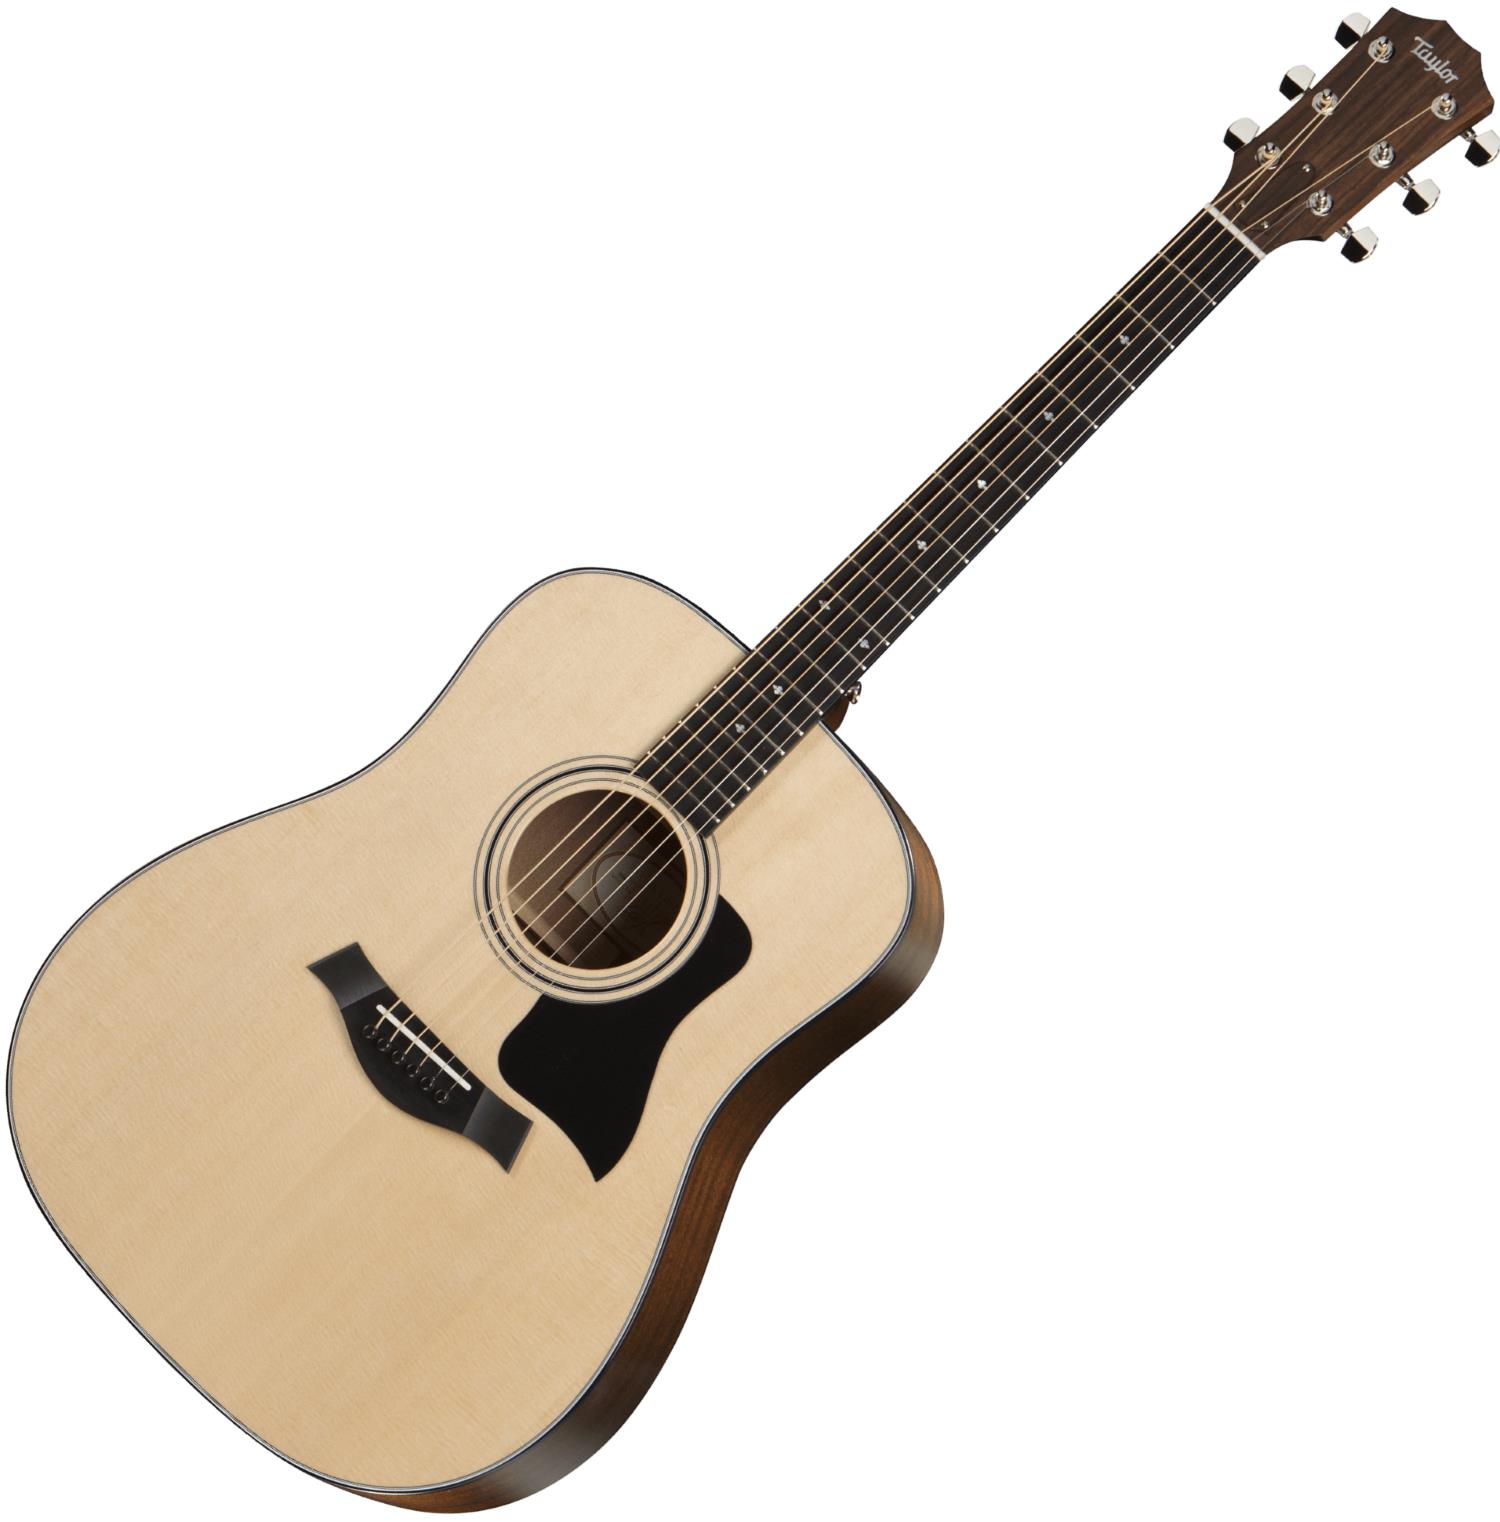 Taylor 310 Acoustic Guitar